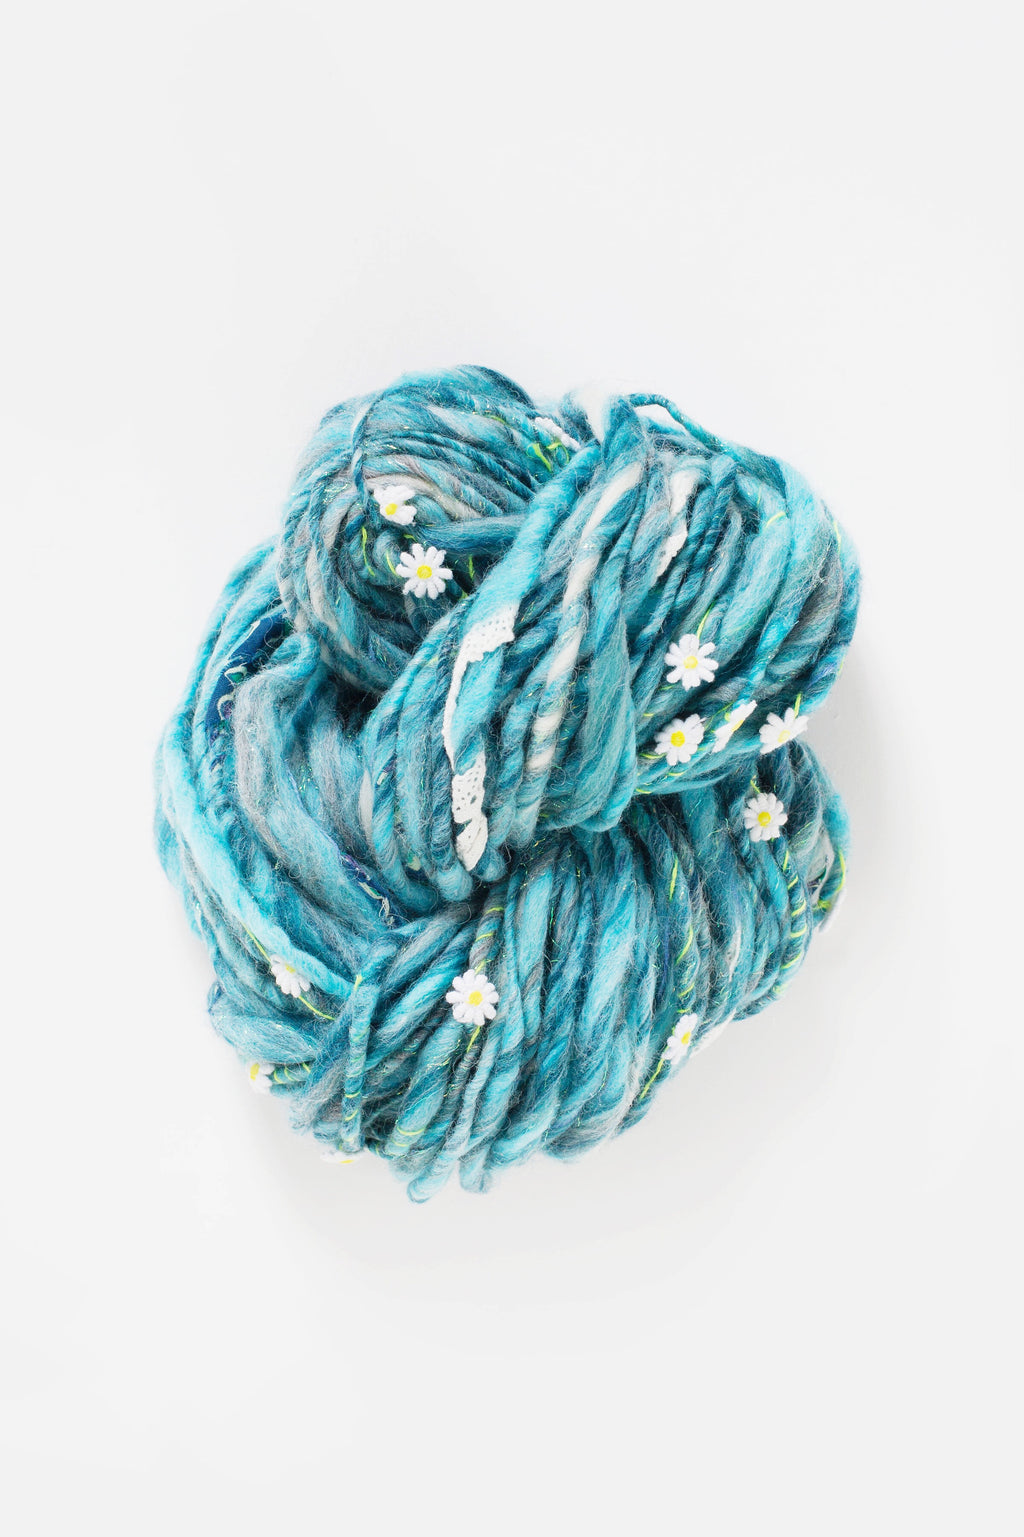 Daisy Chain Yarn in Frosty Azure by Knit Collage - Chunky bulky Hand knitting yarn